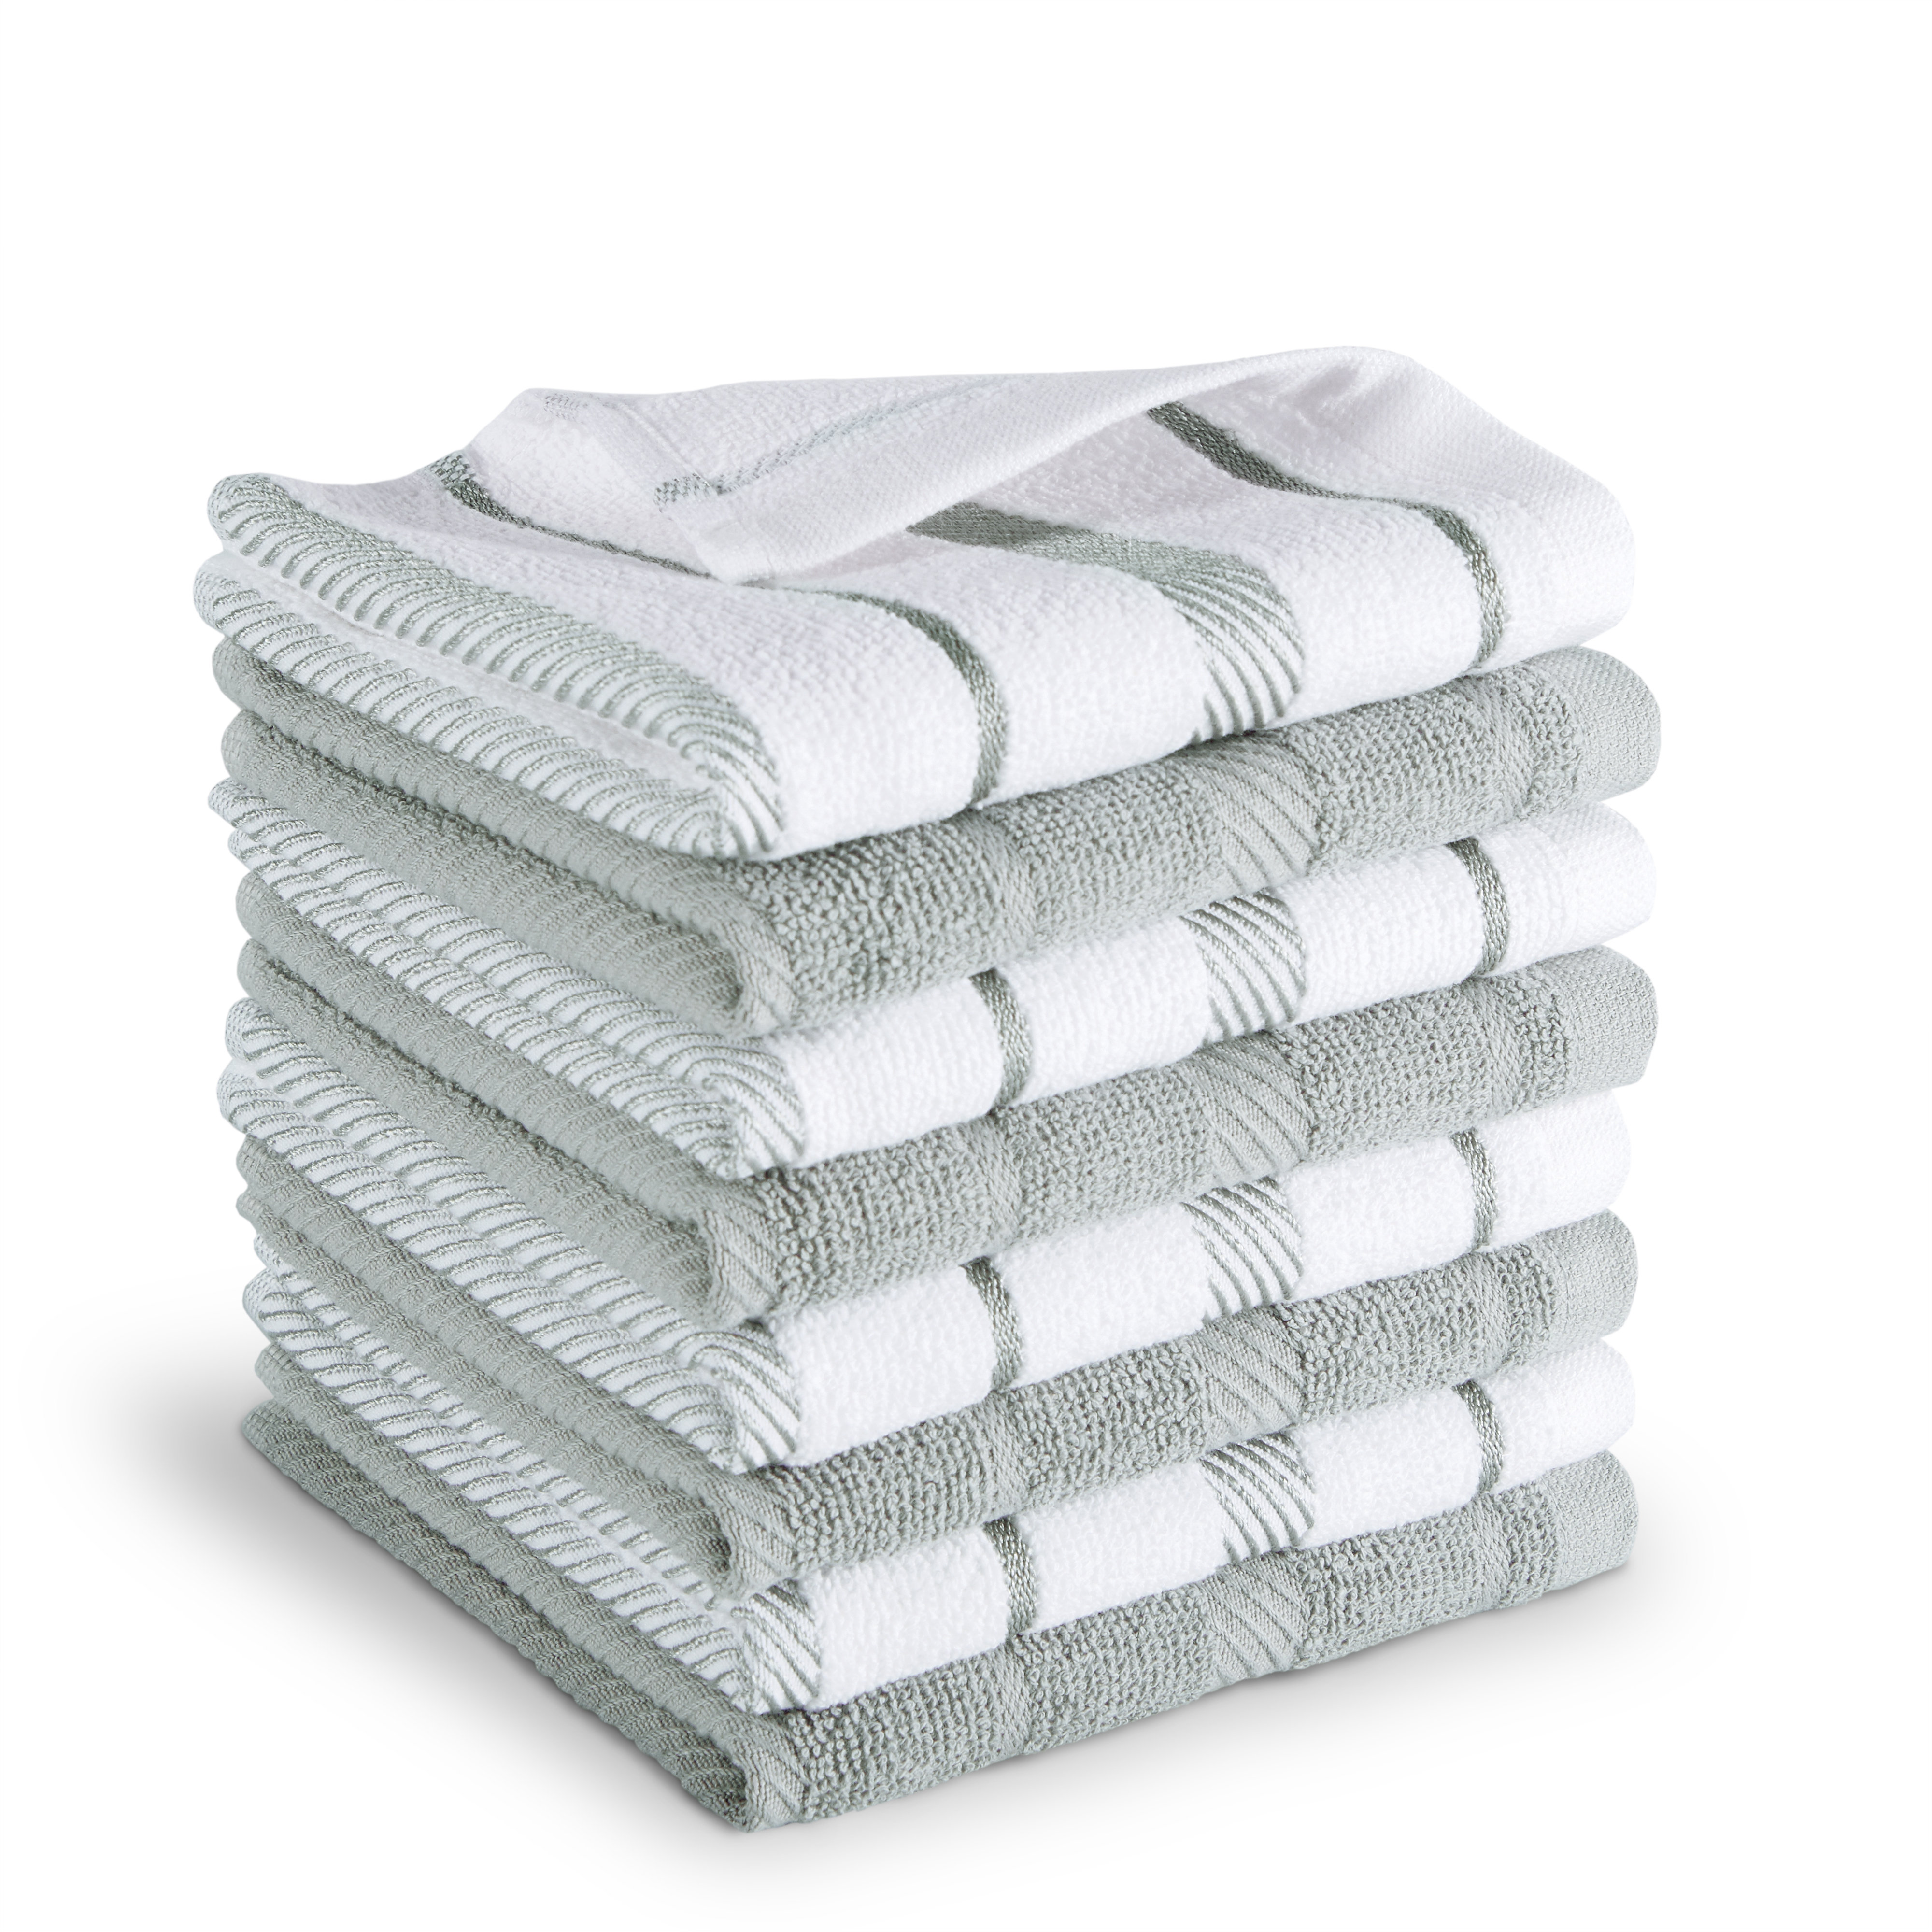 Lowest Price: KitchenAid Albany Kitchen Towel 4-Pack Set